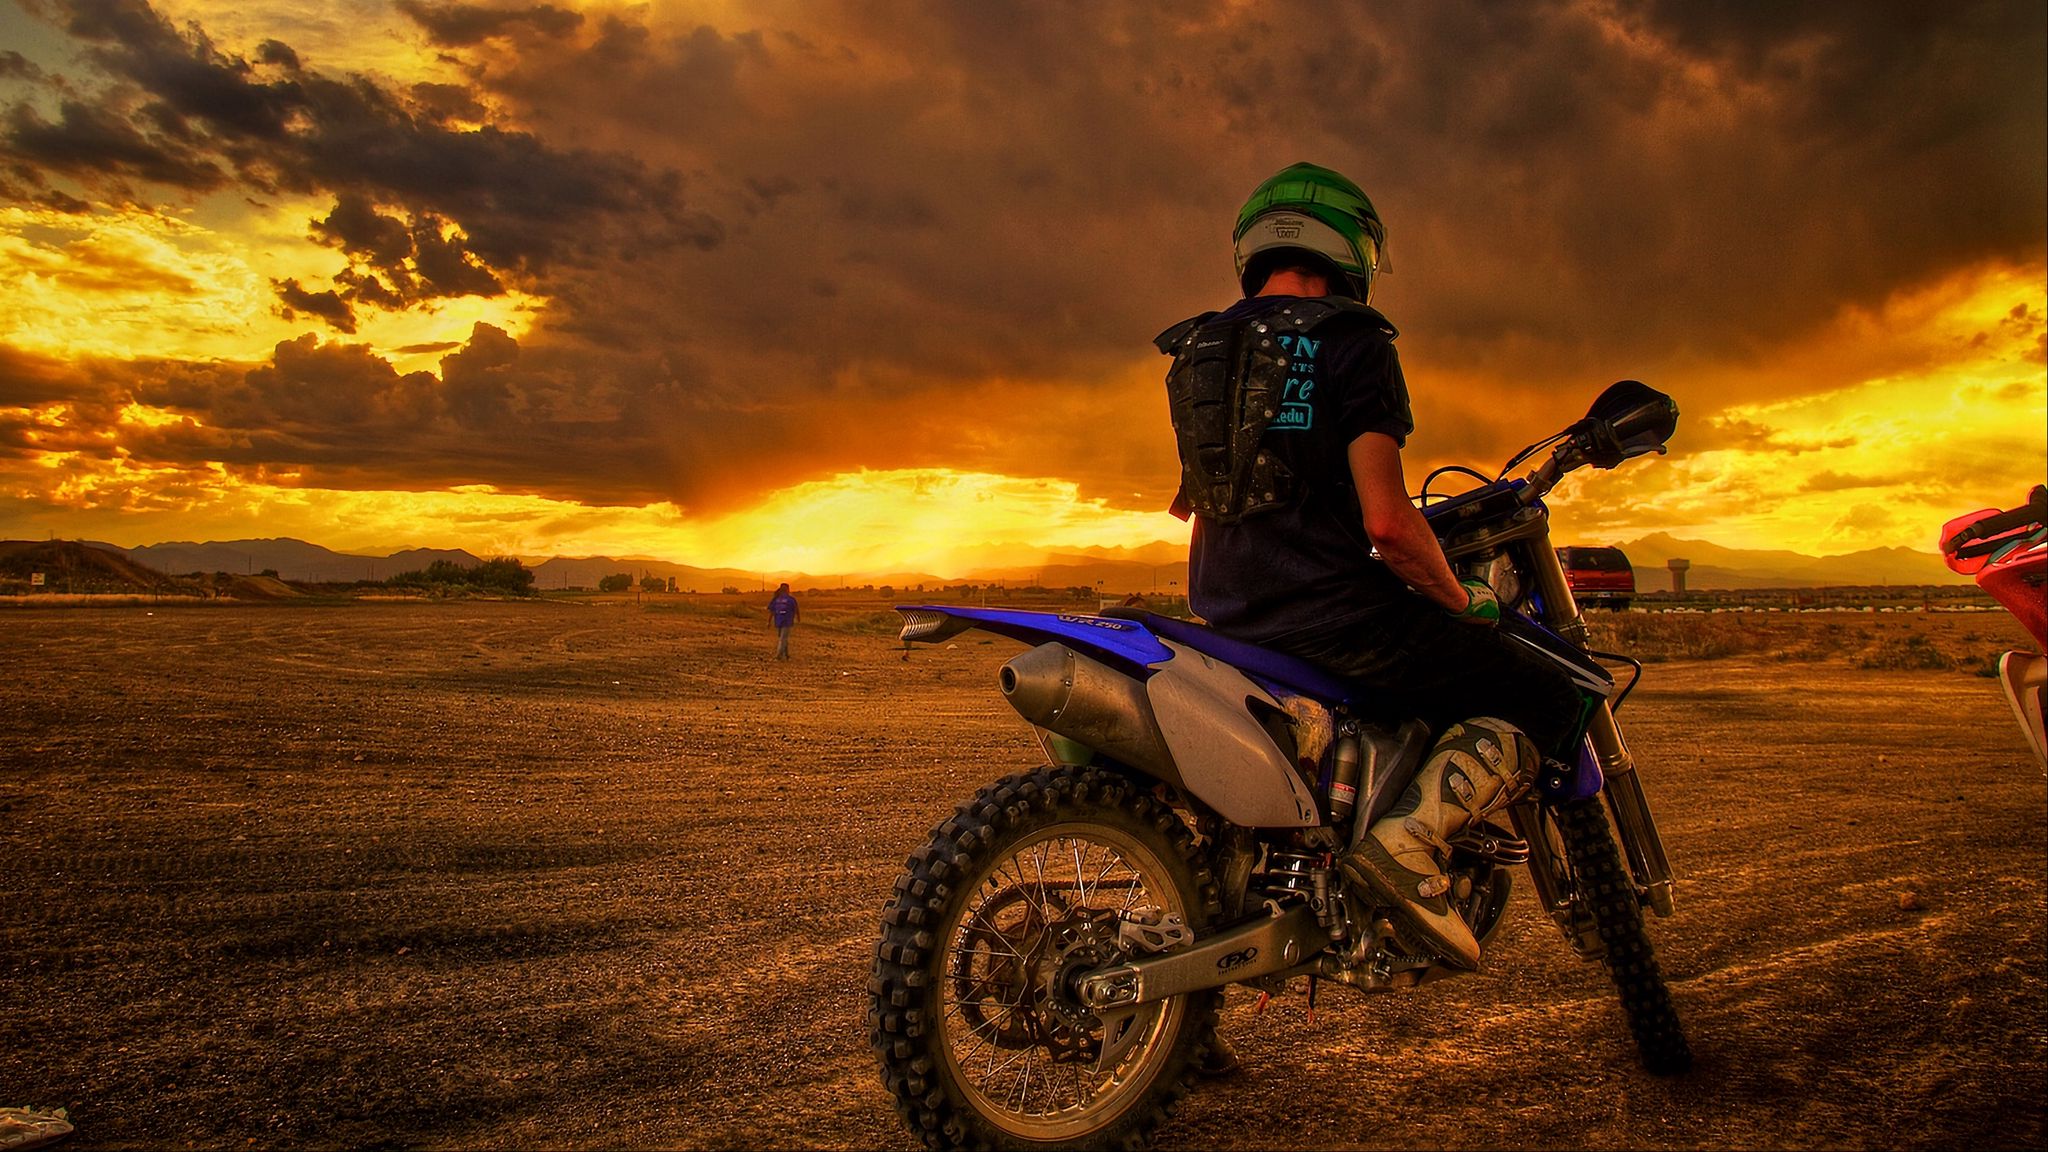 2048x1152 Wallpaper motorcyclist, motorcycle, sunset